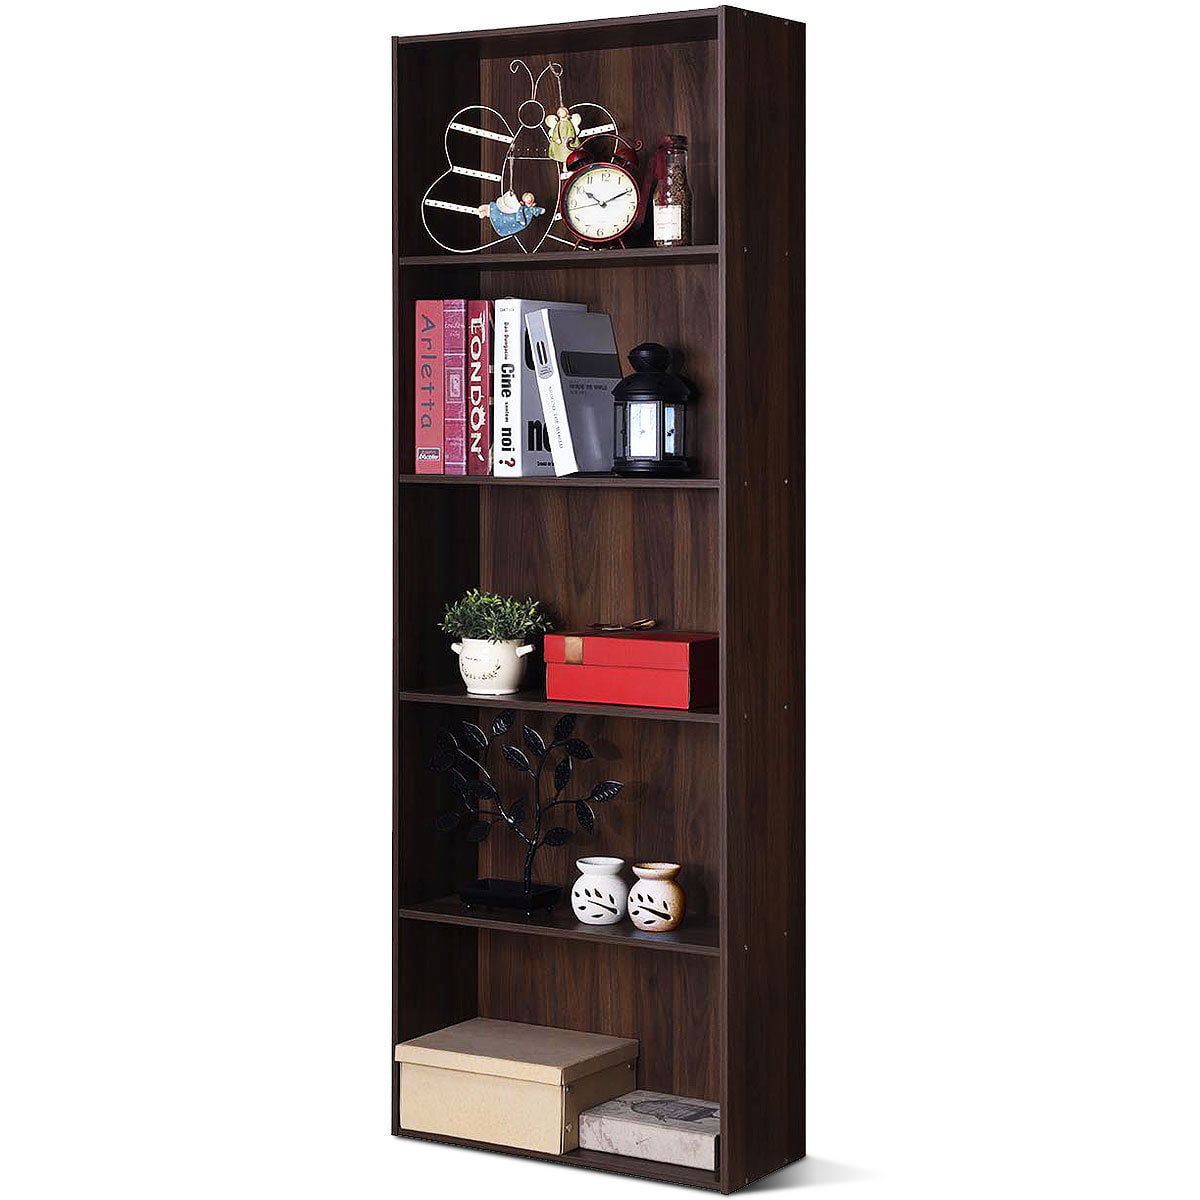 Details about   71" 5 Shelf Bookcase Espresso 